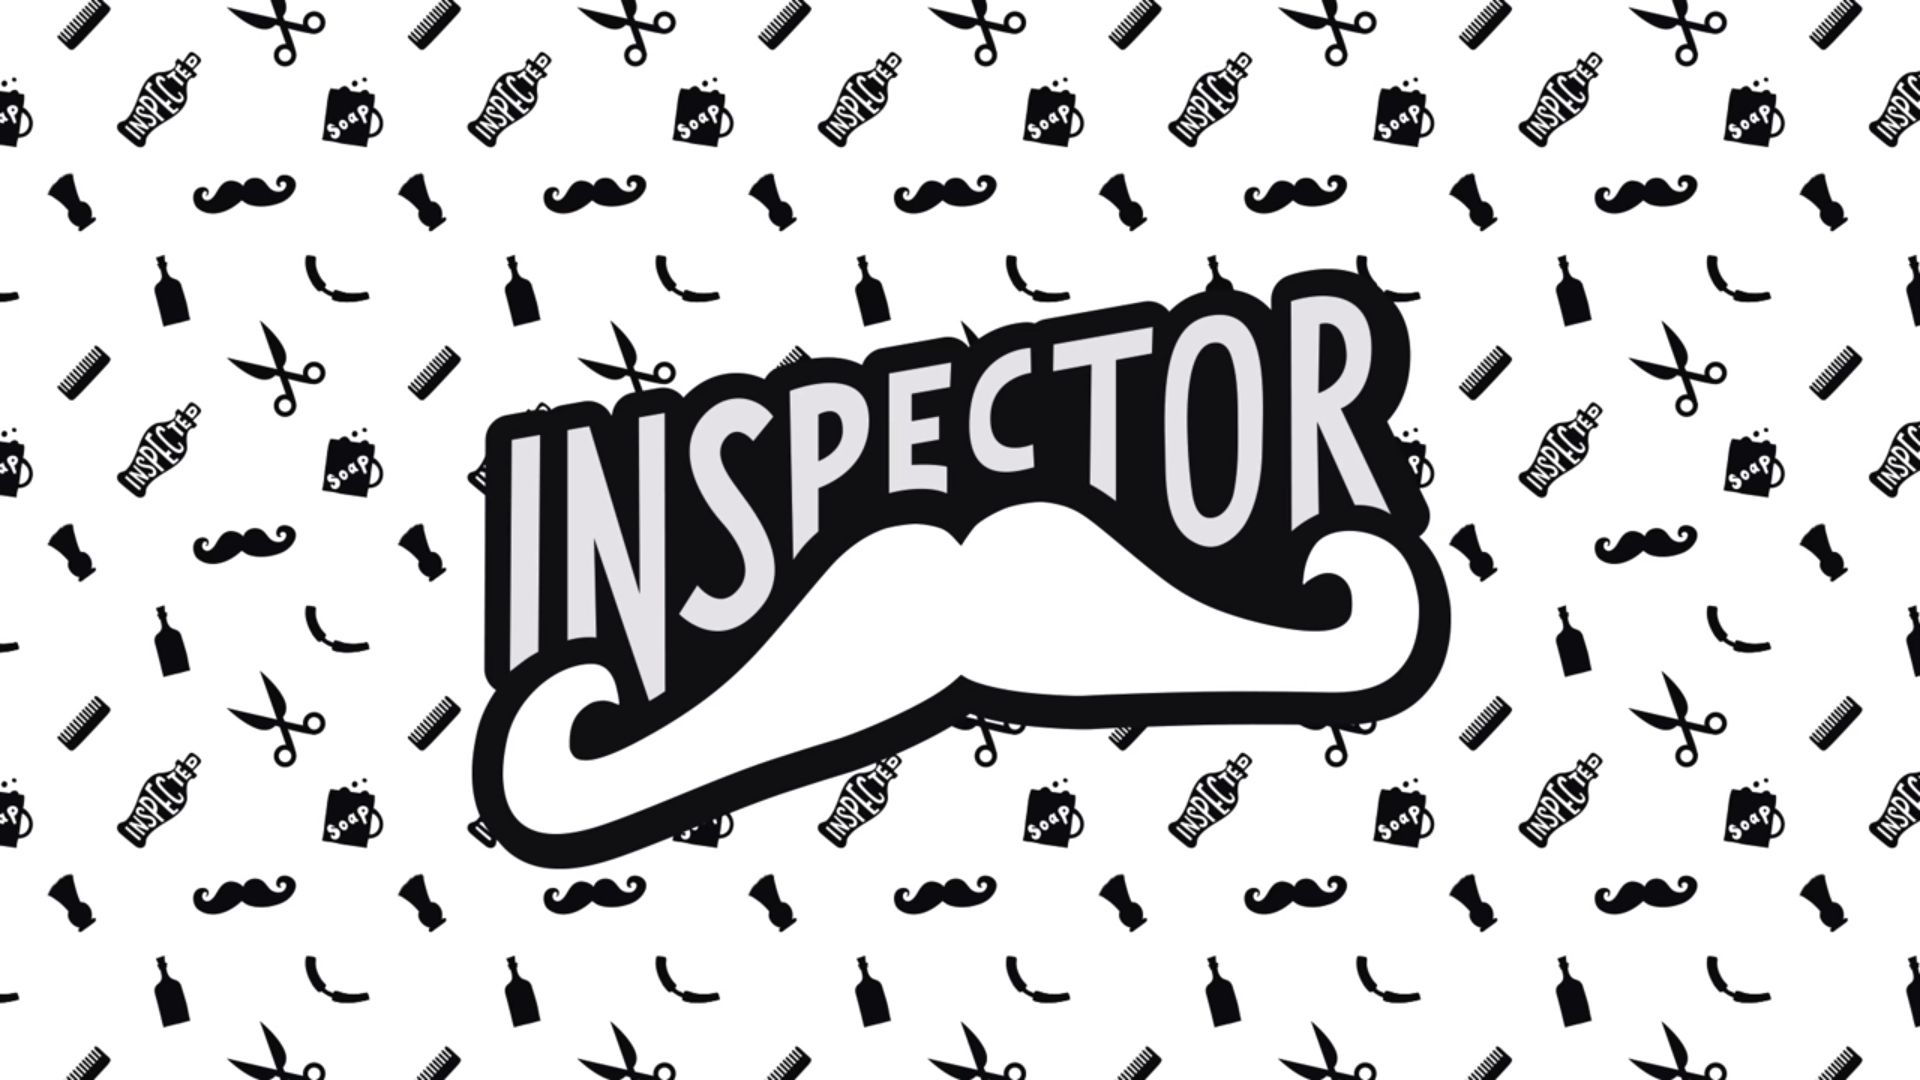 music, inspectordubplate, vintage, youtube